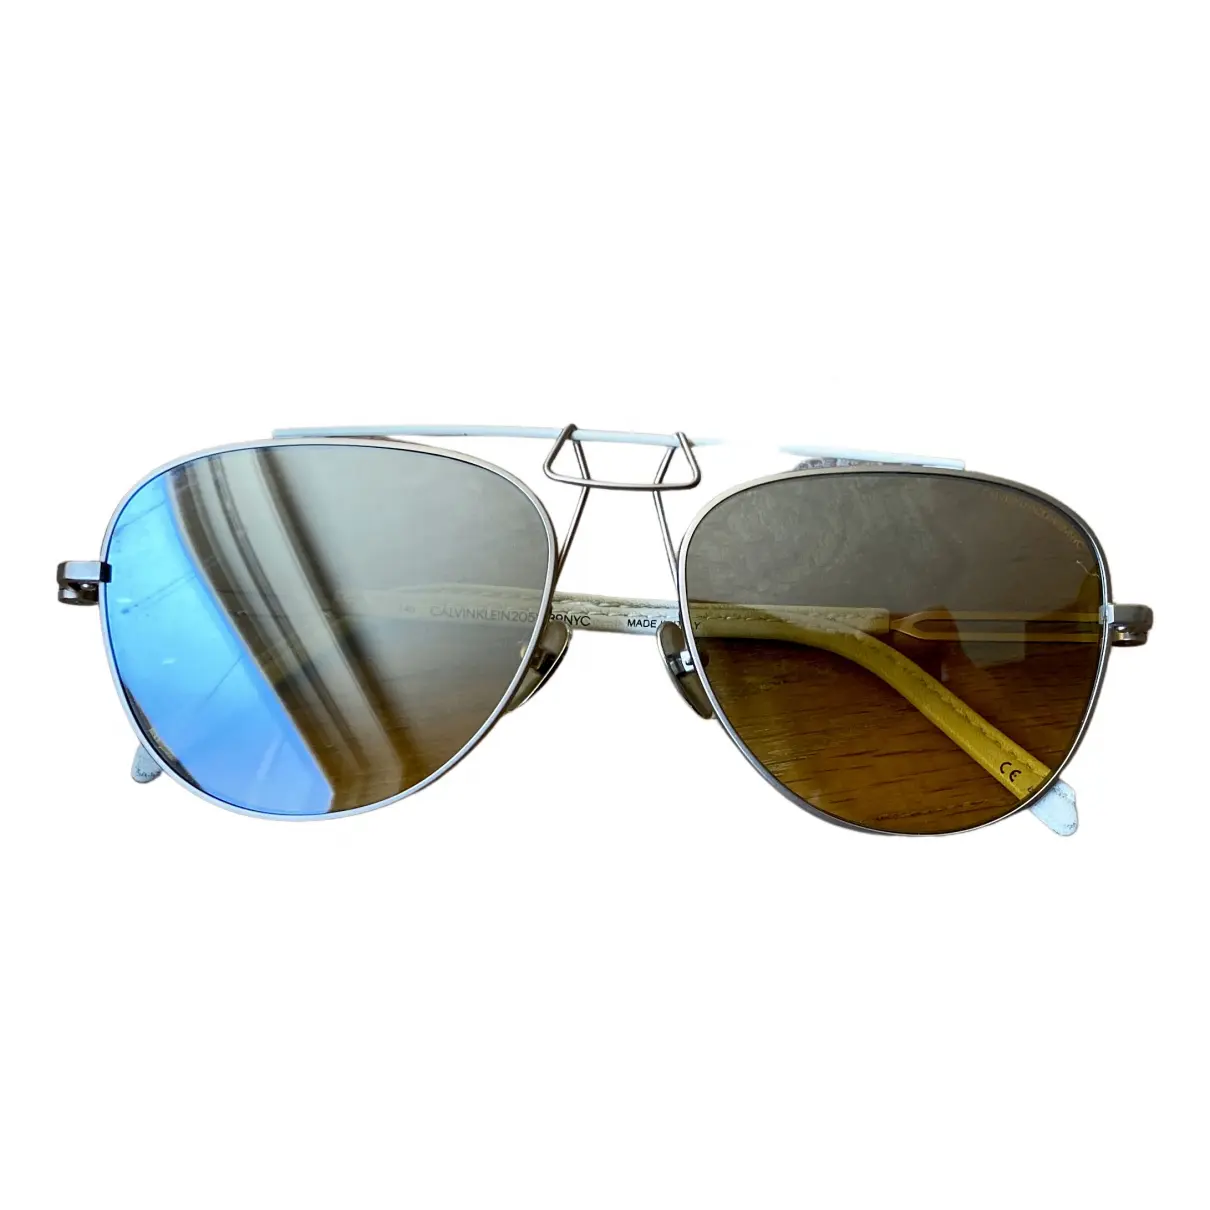 Aviator sunglasses Calvin Klein 205W39NYC